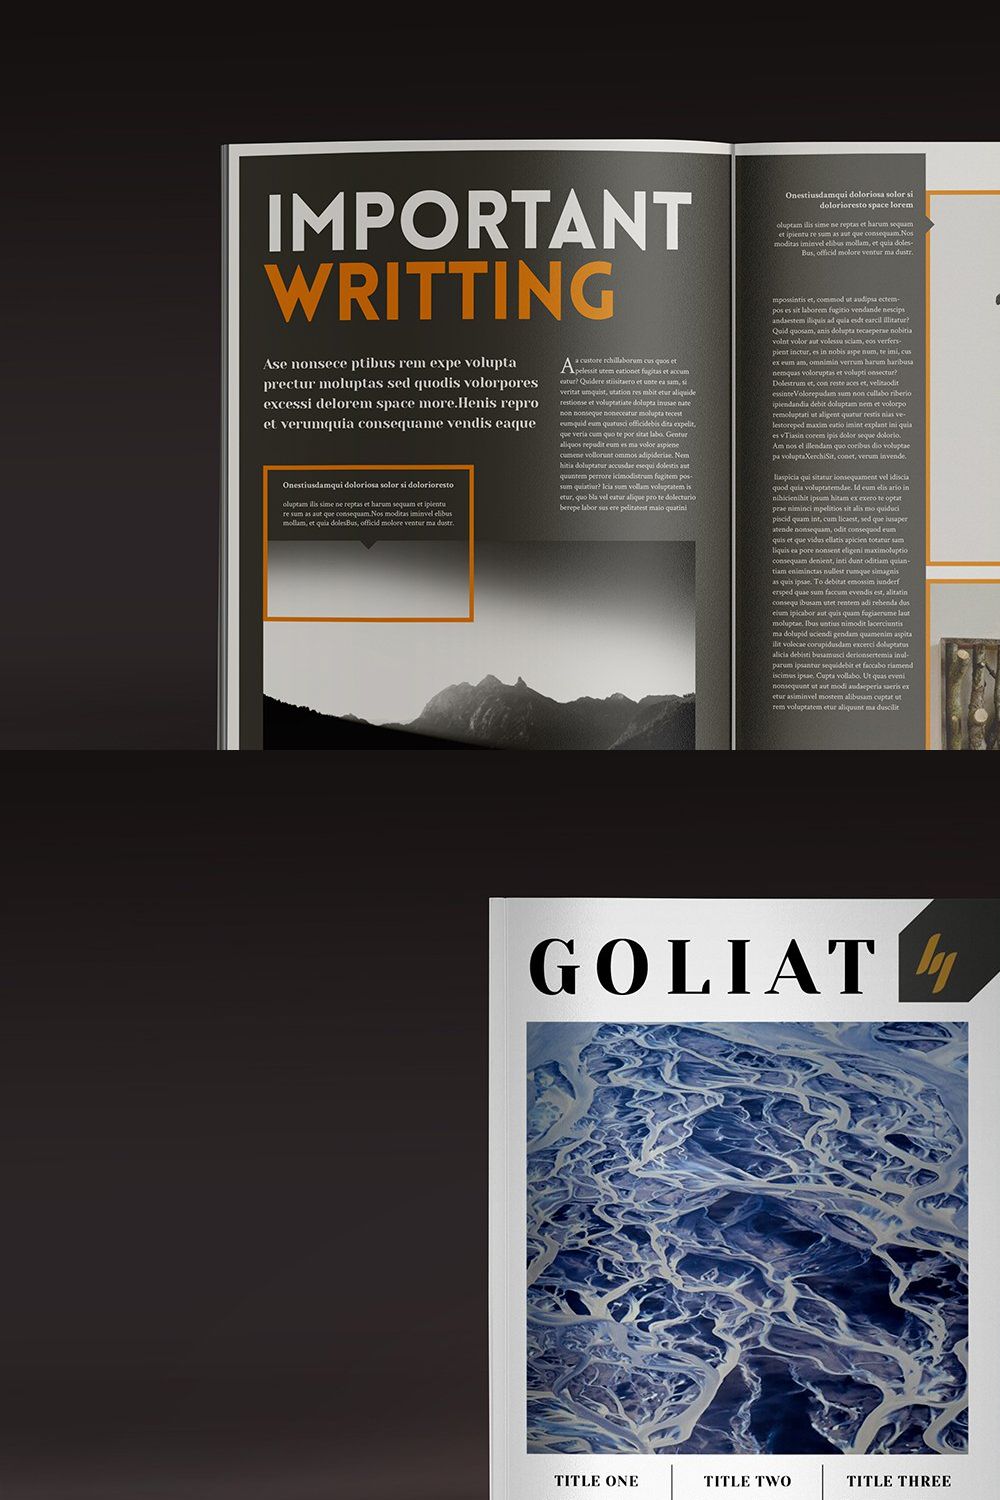 Goliat Magazine pinterest preview image.